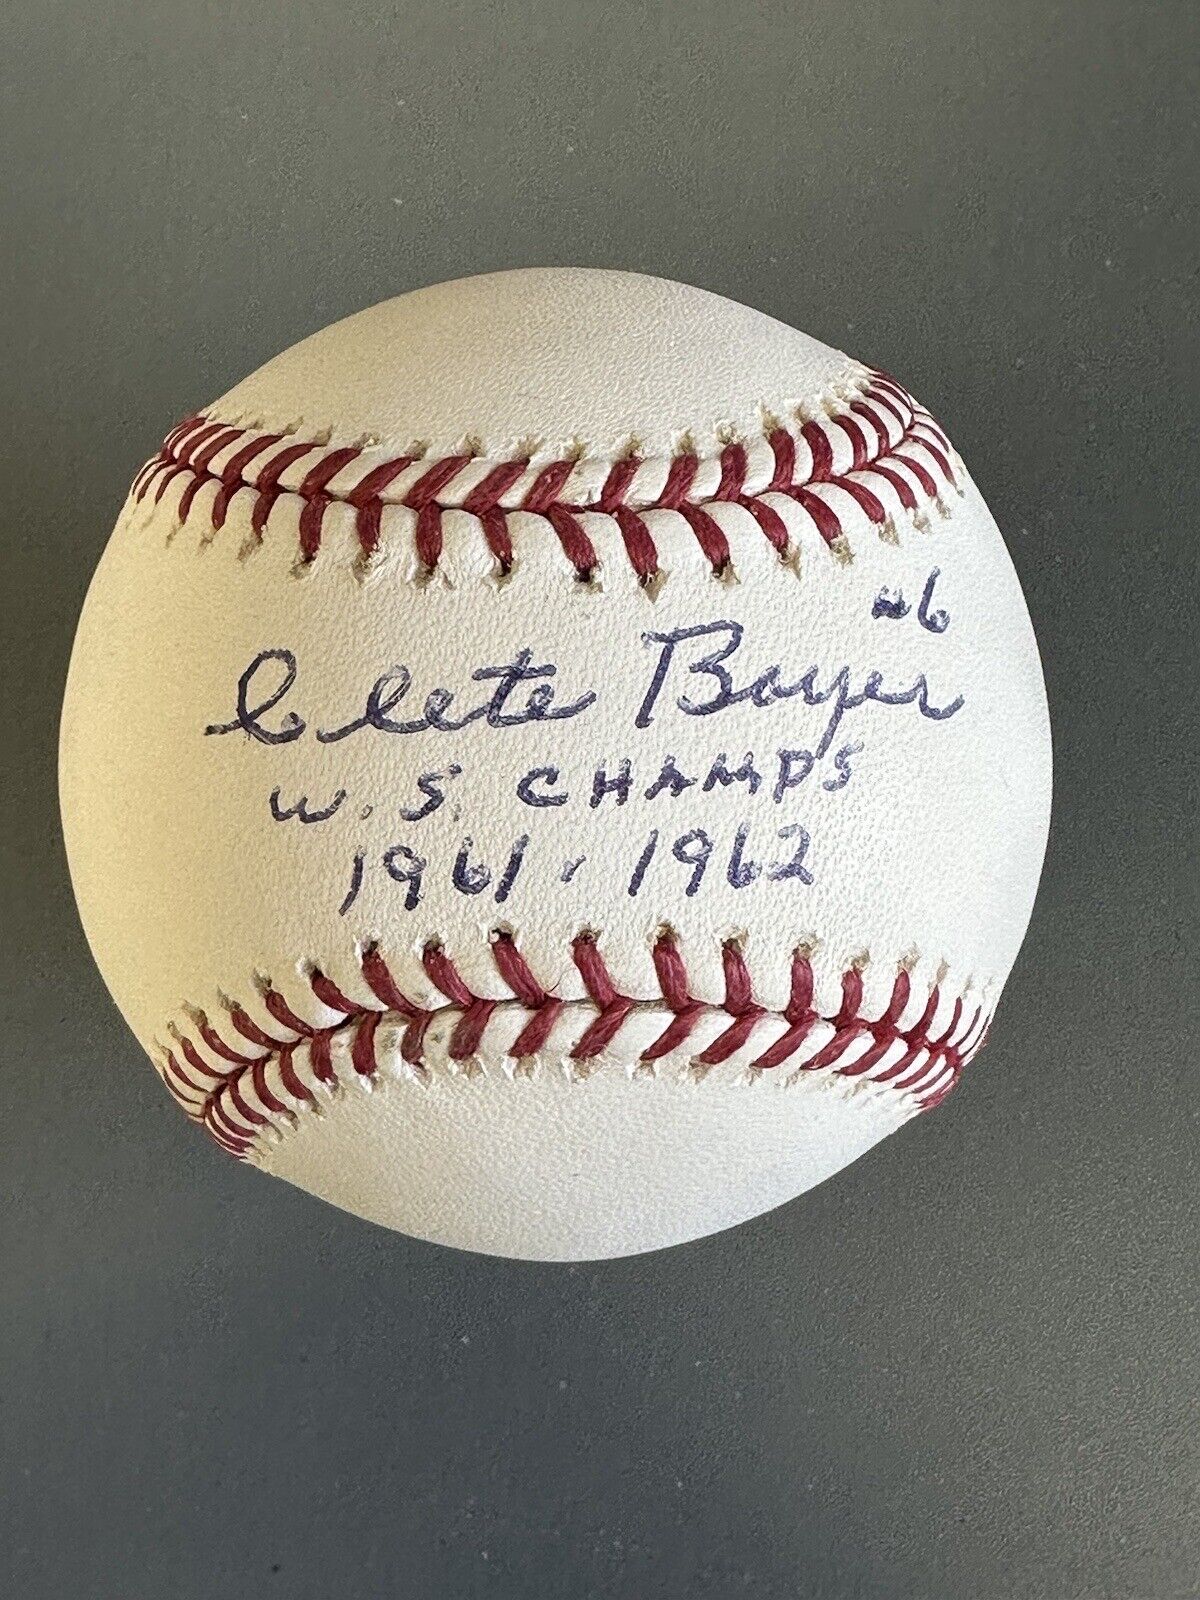 Clete Boyer #6 WS Champs 1961 62 Yankees SIGNED Official MLB Baseball w/hologram